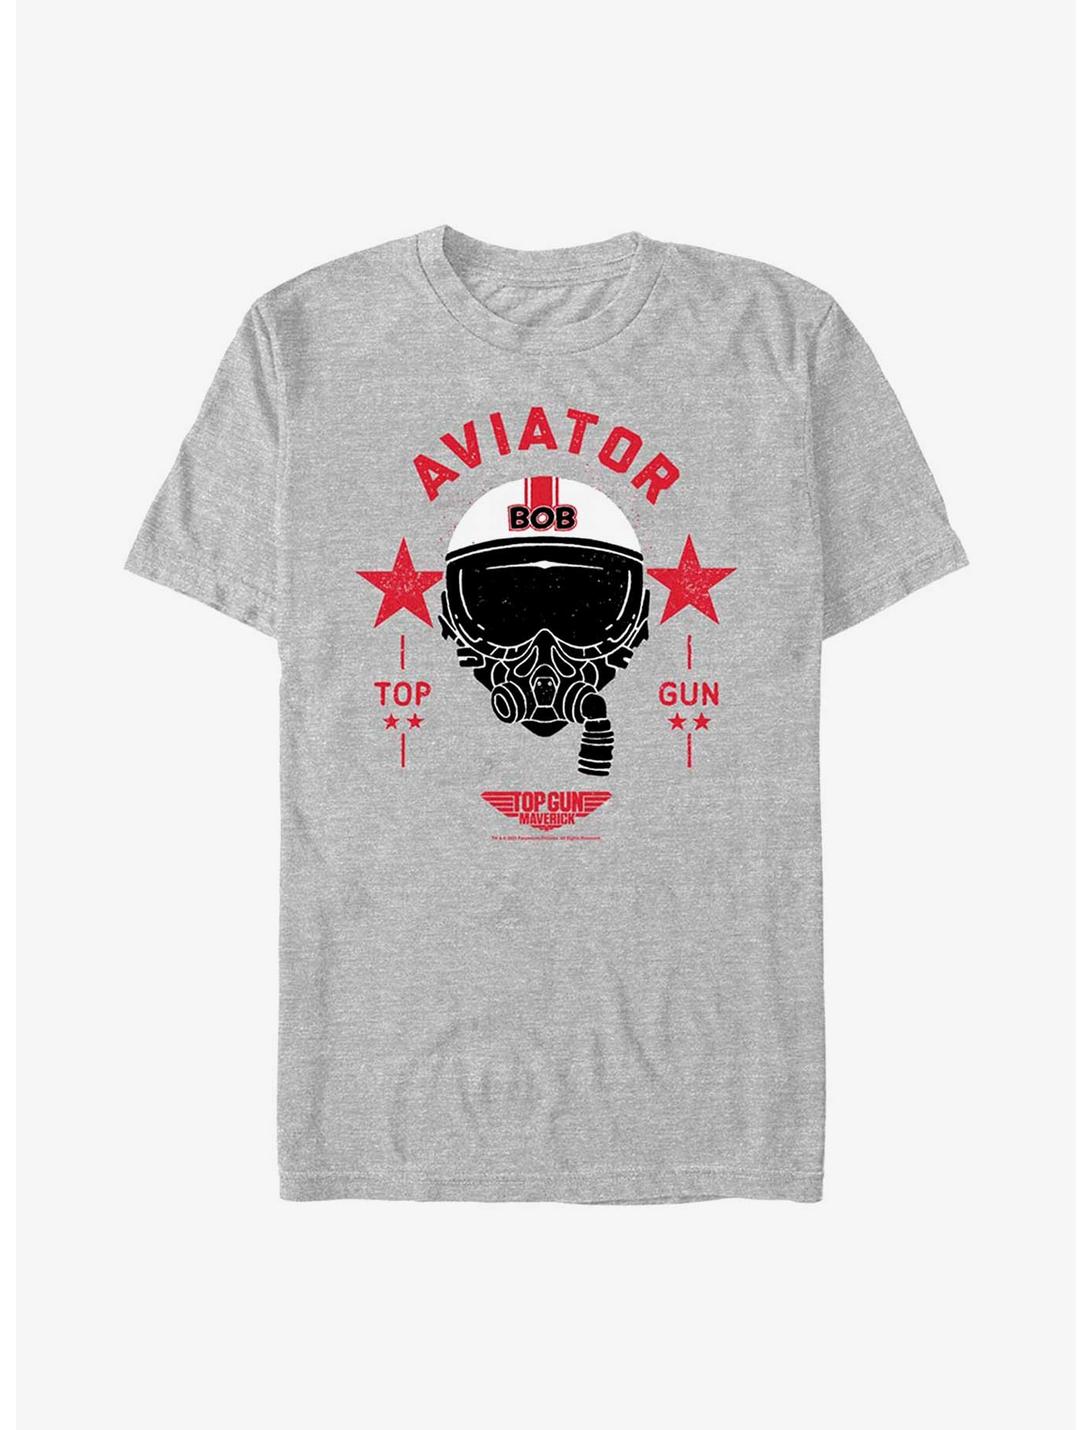 Top Gun Maverick Bob Aviator T-Shirt, ATH HTR, hi-res